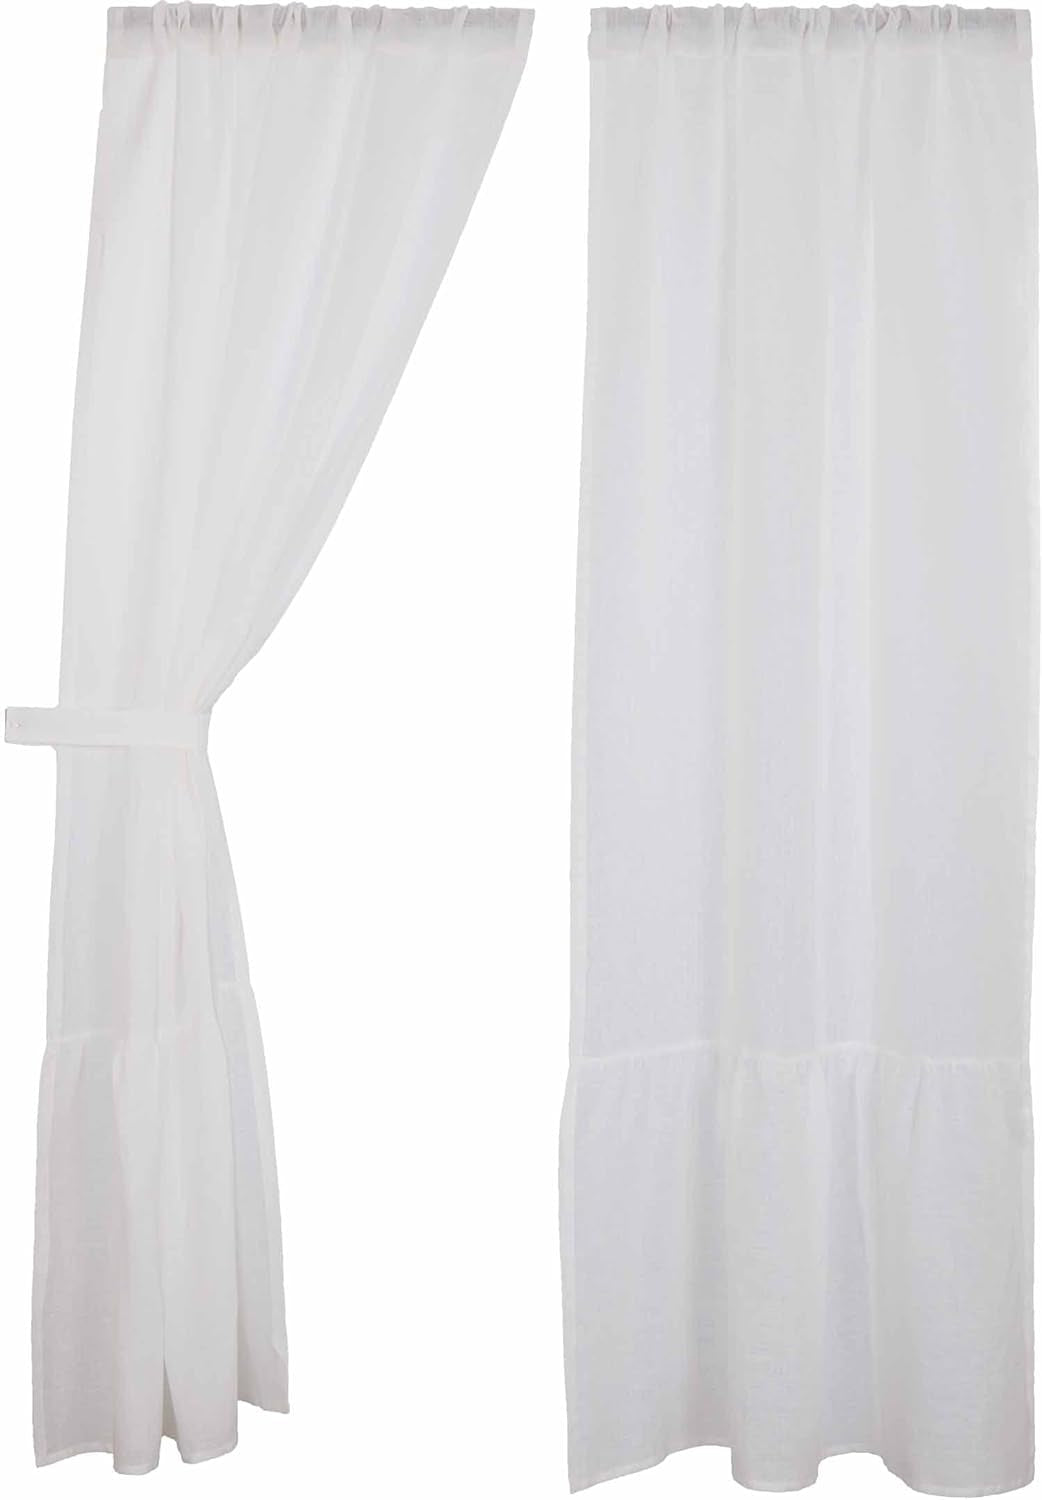 Piper Classics Provincial Linen White Ruffled Panel Curtains, Set of 2 Panels, 84" Long X 40" W, 100% Linen Drapes  Piper Classics   